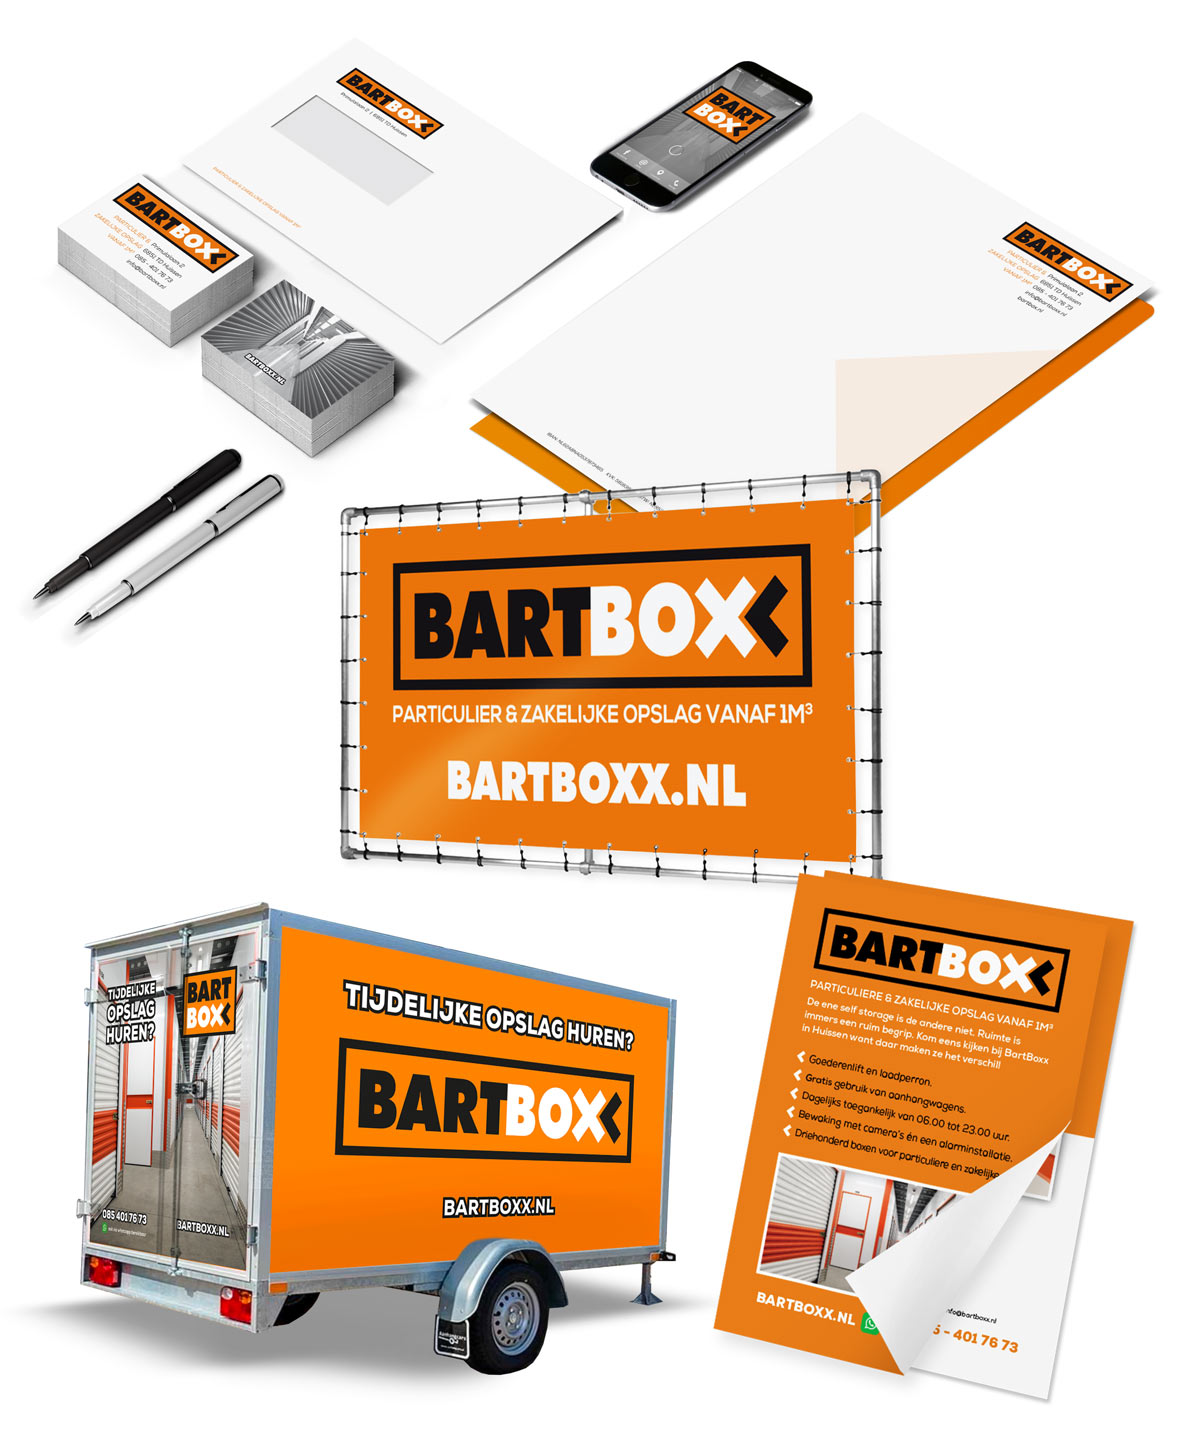 BartBoxx